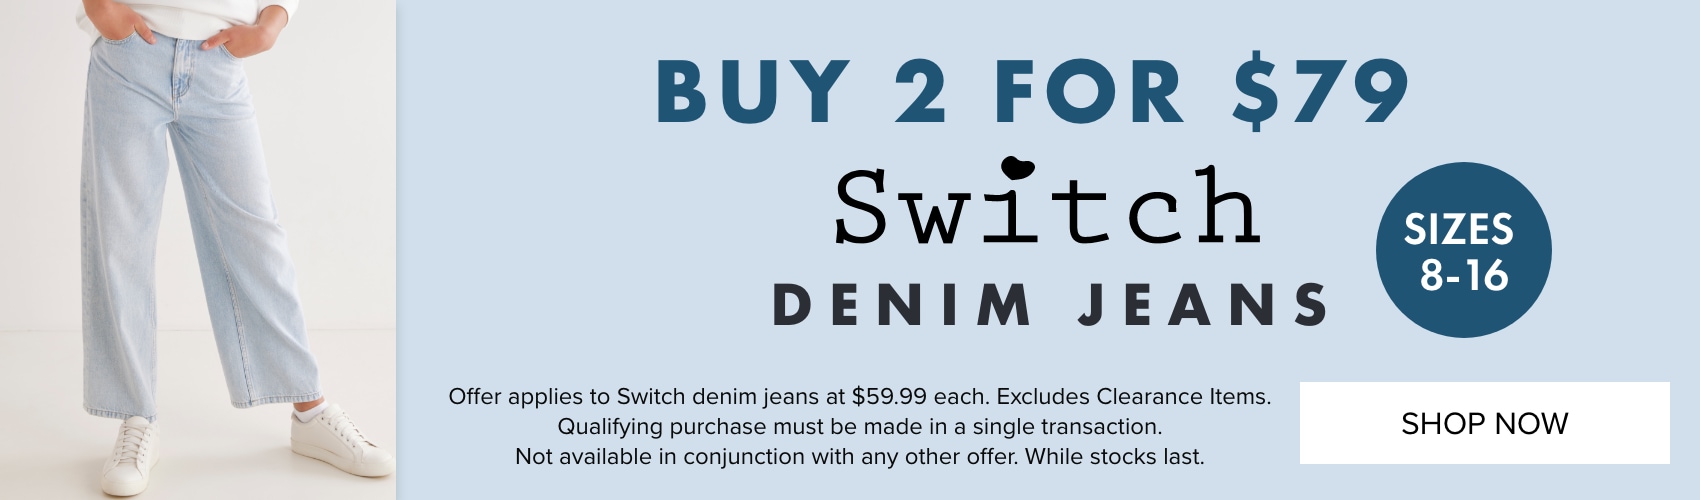 BUY 2 FOR $79 Switch Denim Jeans 